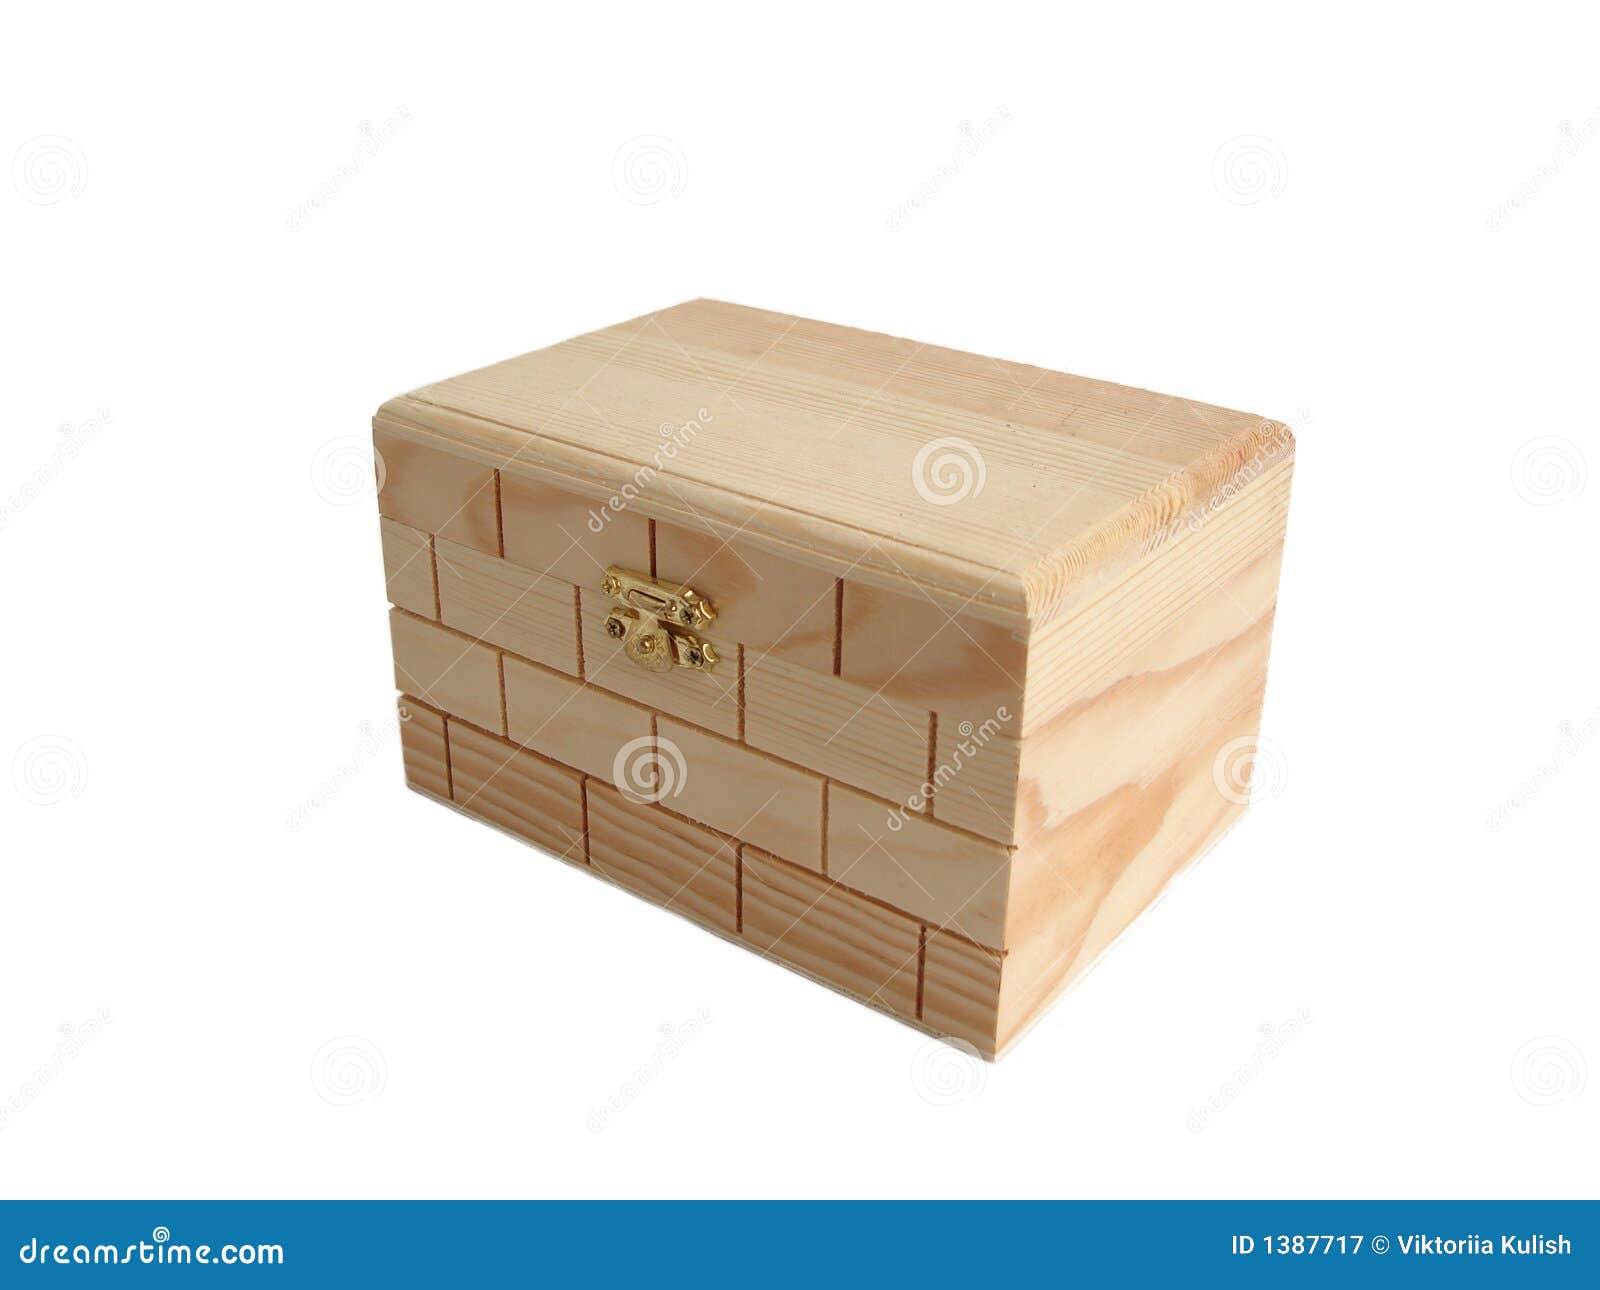 wooden treasure chest keepsake box over white background